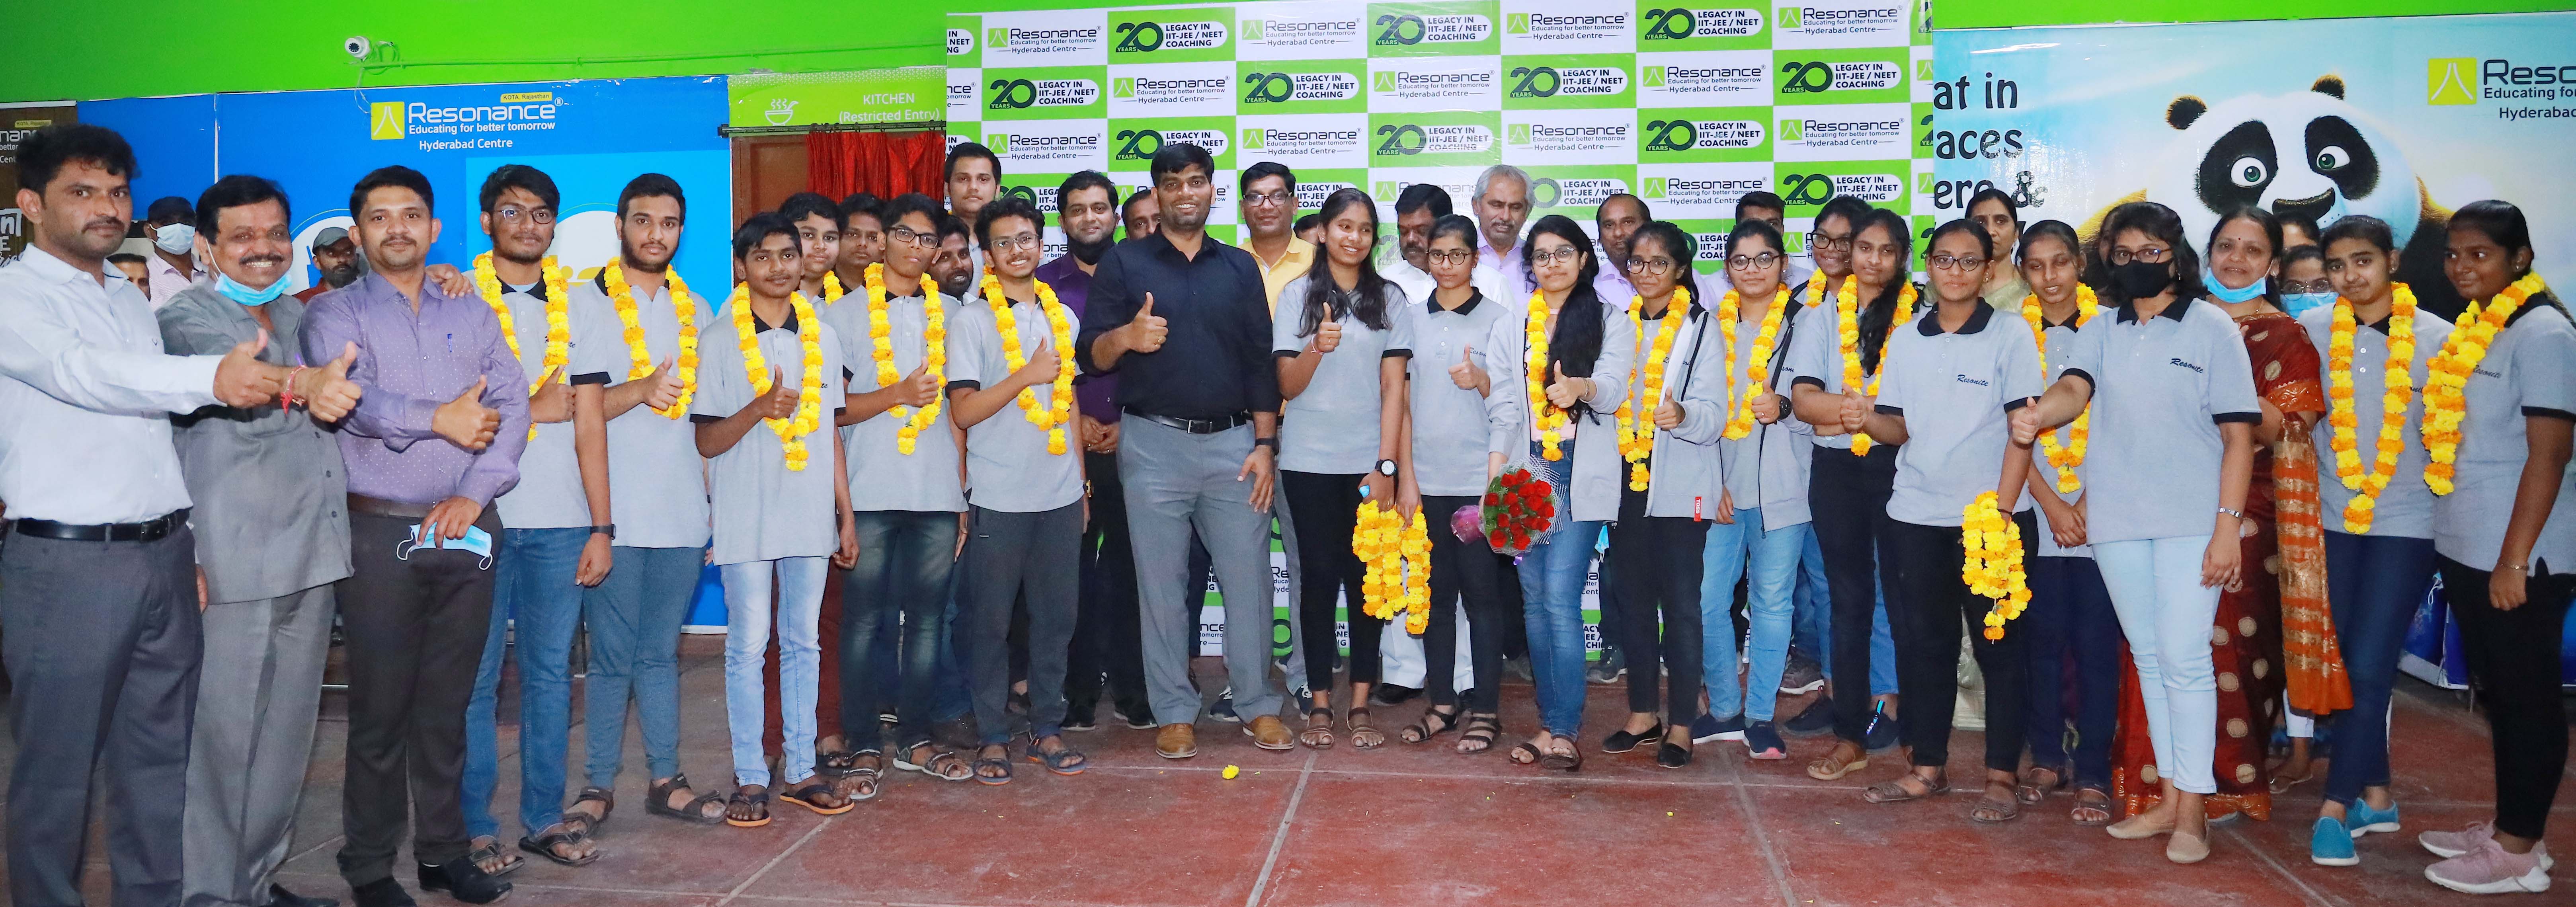 Resonance Junior College, Hyderabad, students  excel in IPE results!